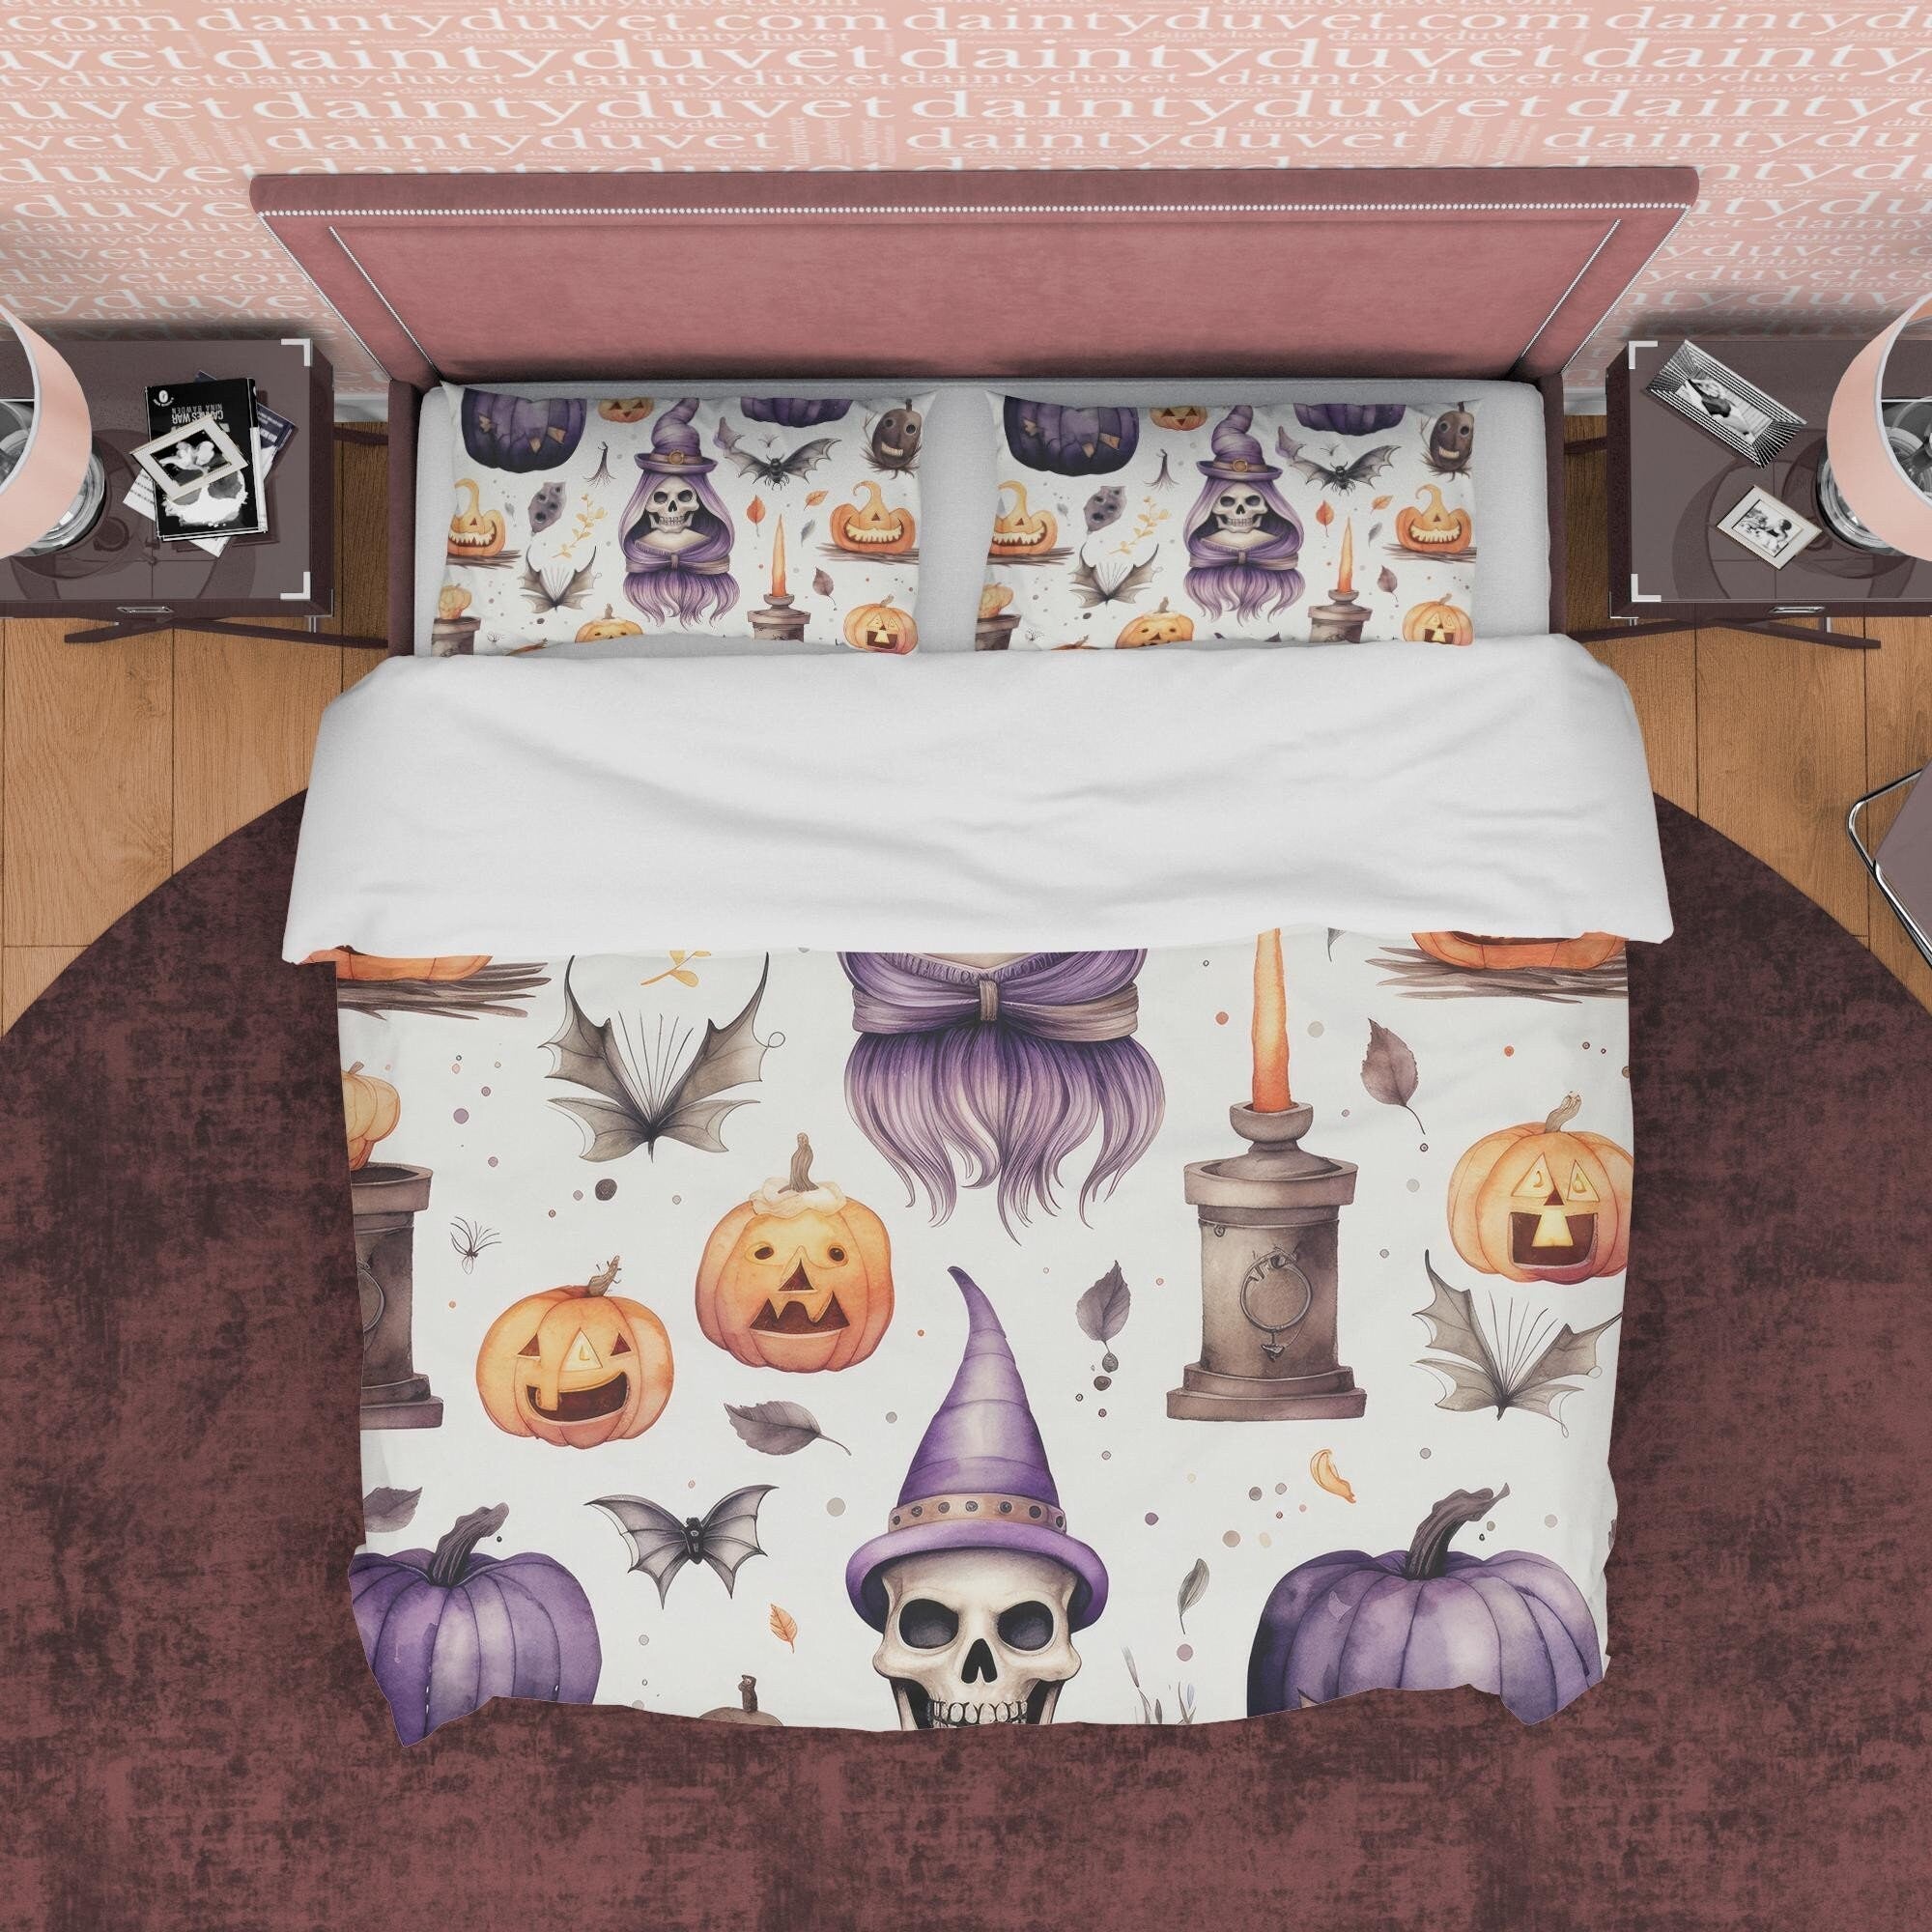 Pumpkin Duvet Cover Set Retro Aesthetic Bedding, Halloween Room Decor, Spooky Bedspread, Autumn Quilt Cover, White Zipper Bed Cover